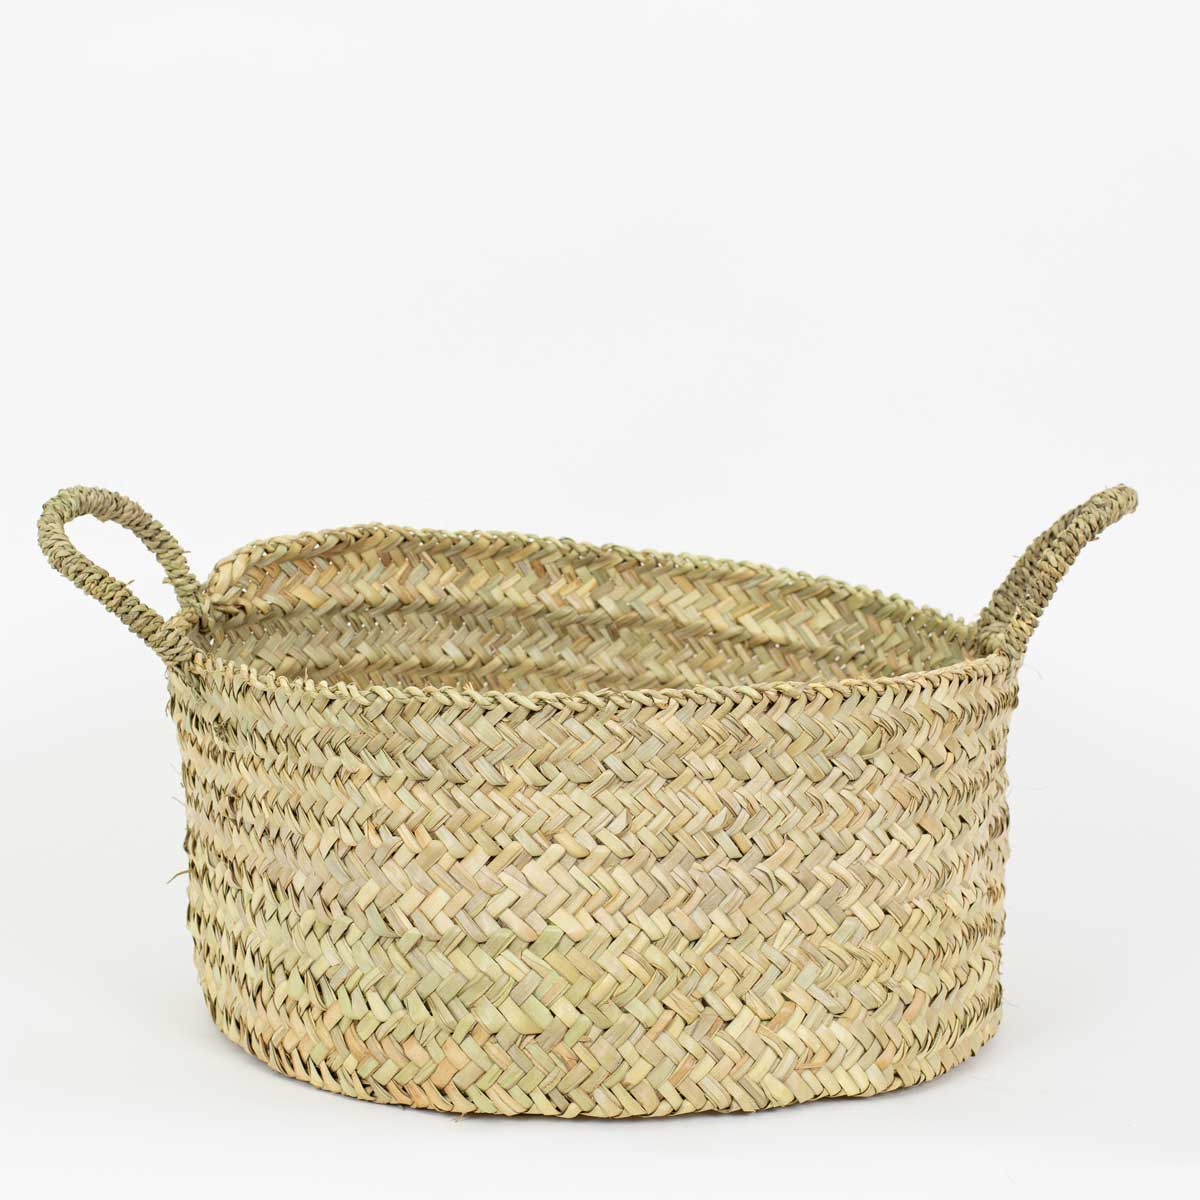 MAROC Firewood basket